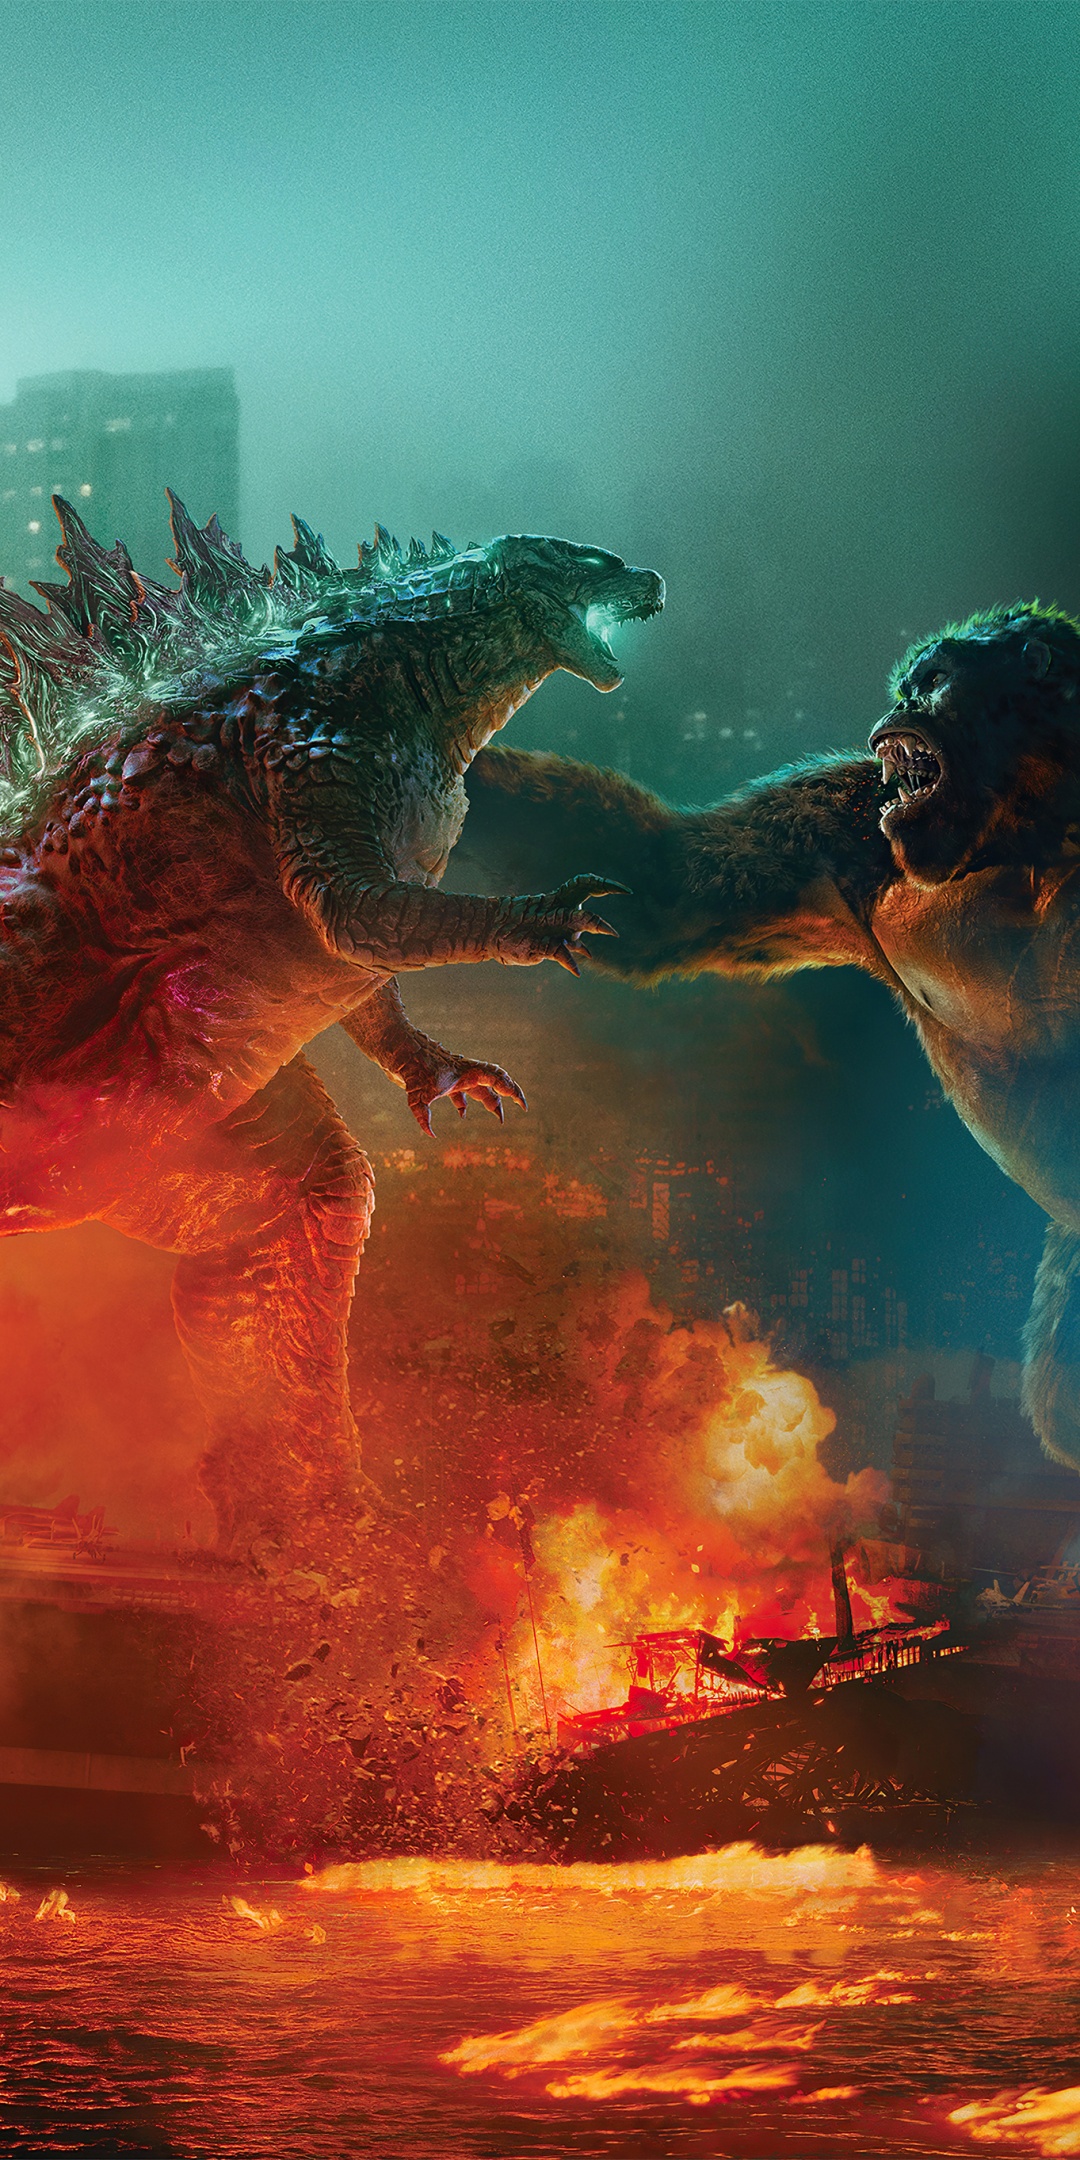 Godzilla vs Kong Wallpaper 4K, 5K, 2021 Movies